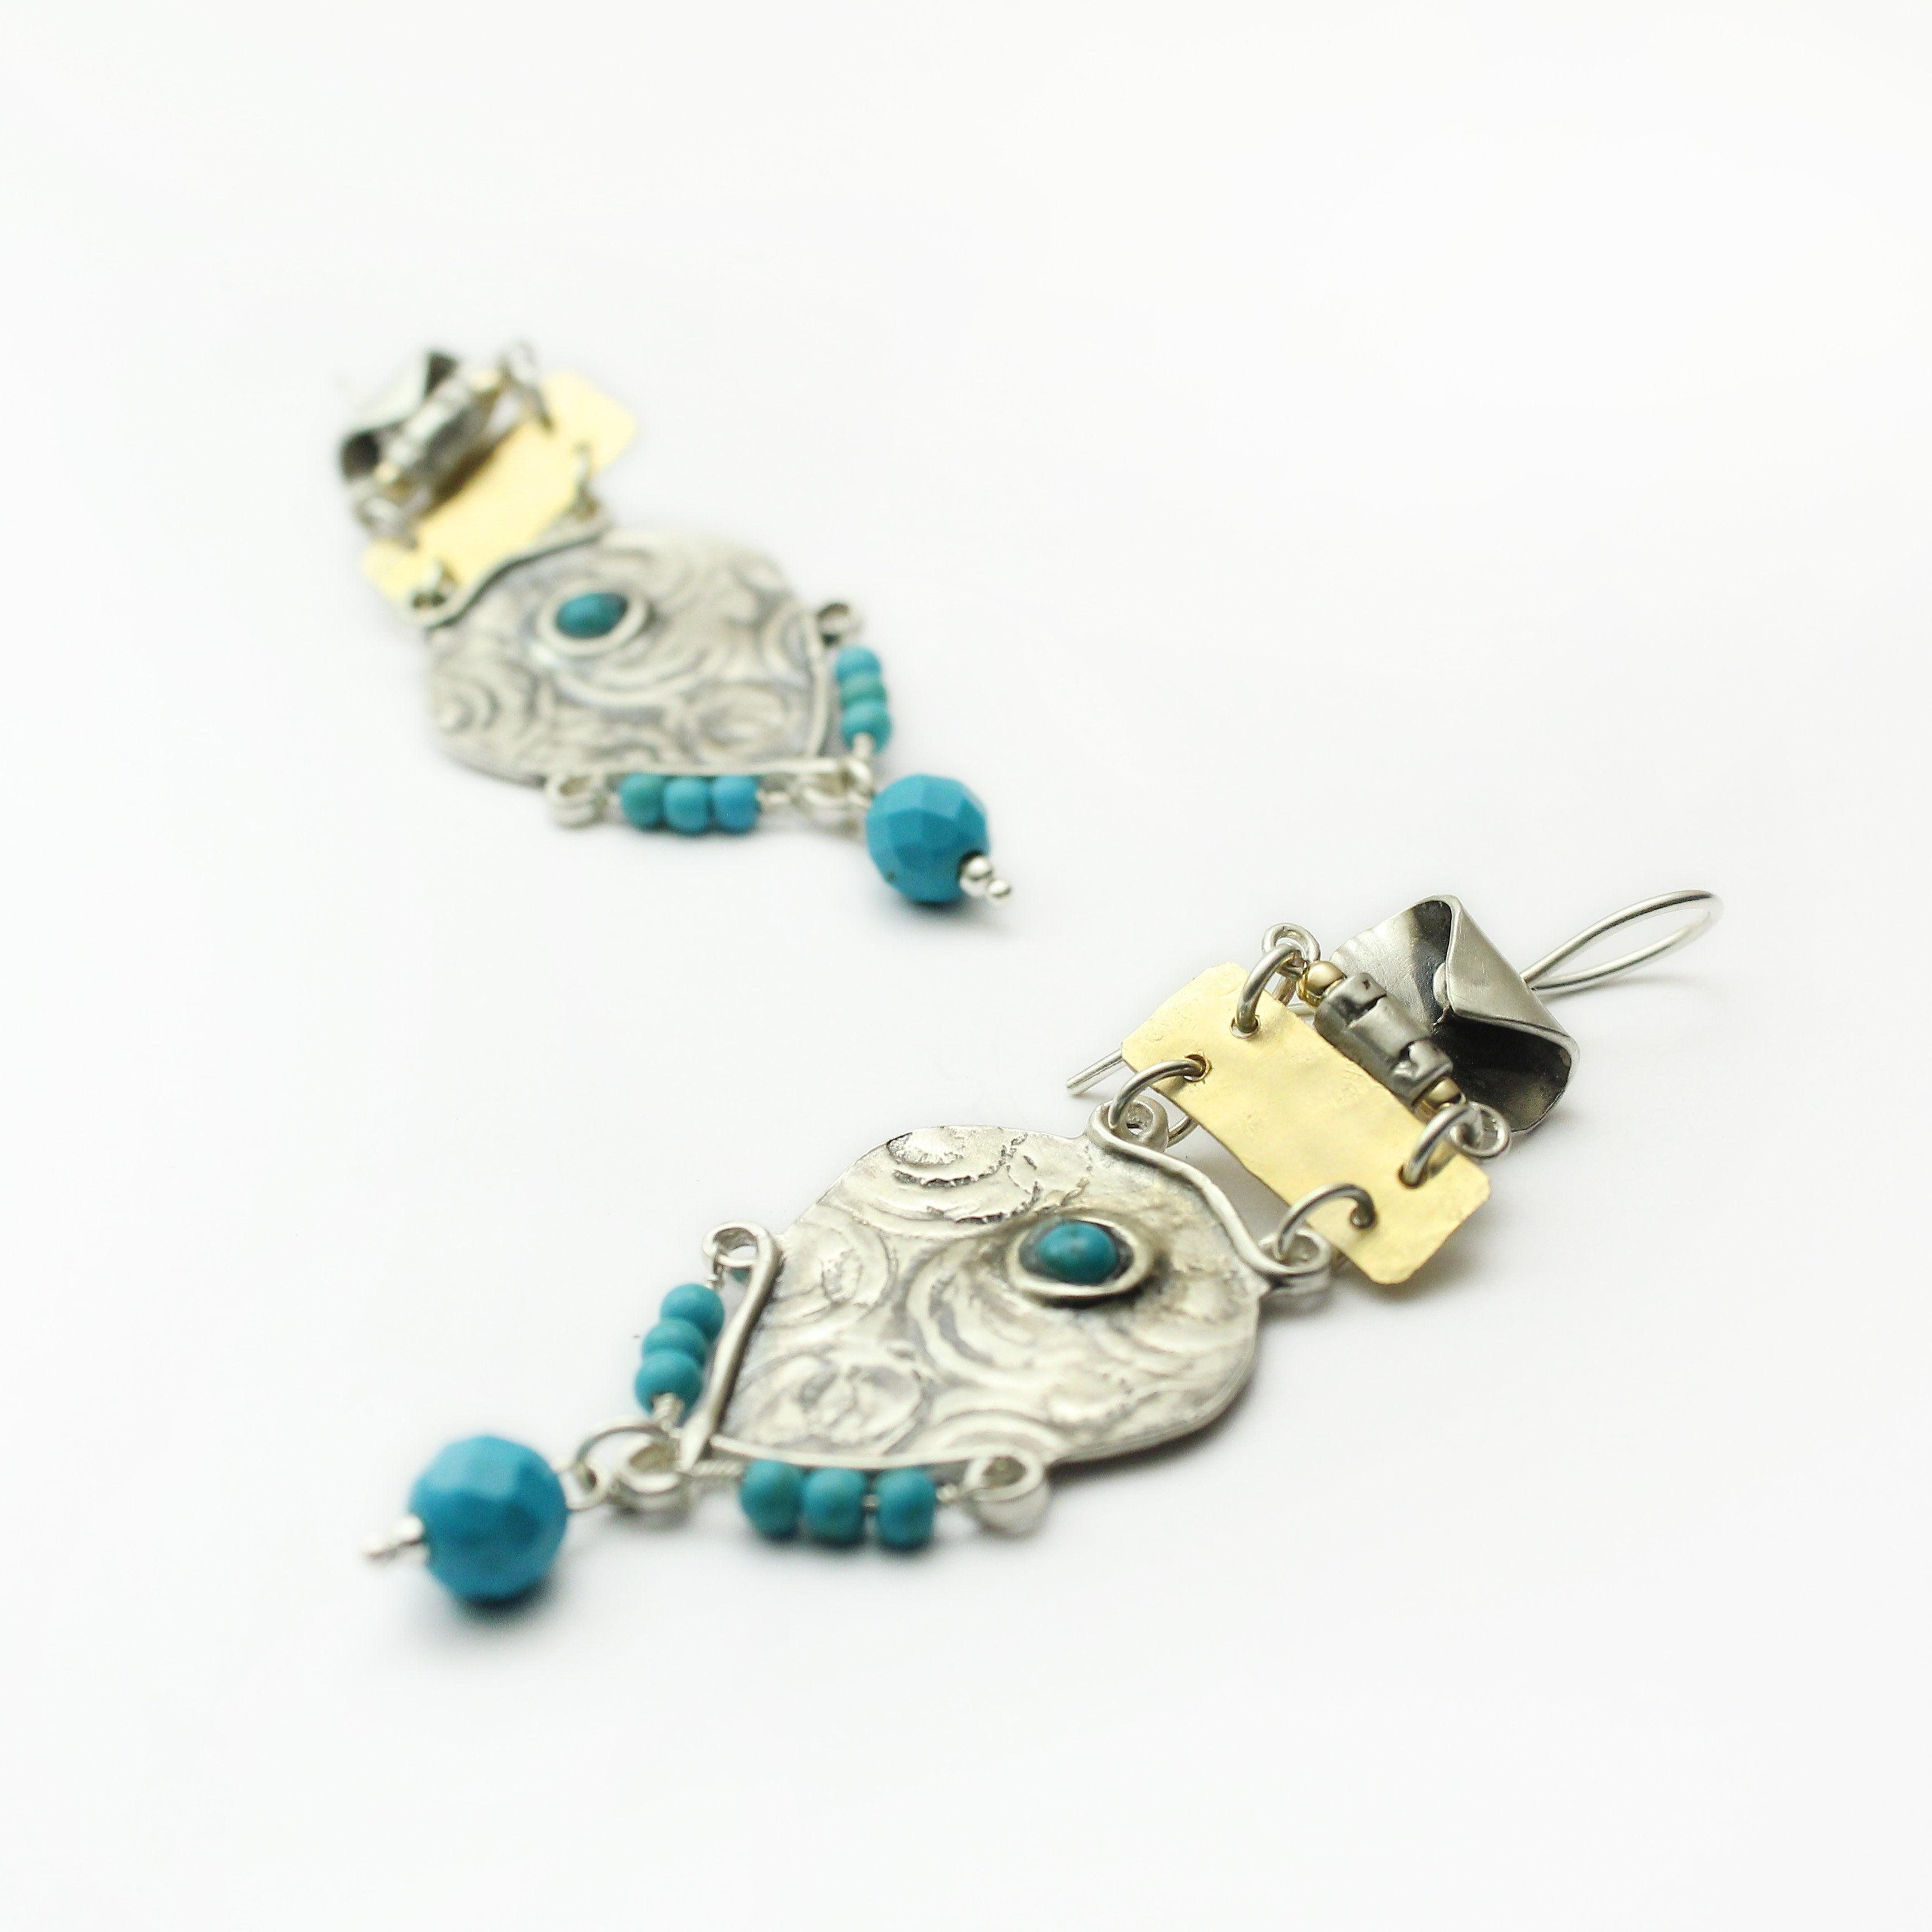 Silver & Gold filled & Turquoise Gemstone Earrings - Shulamit Kanter